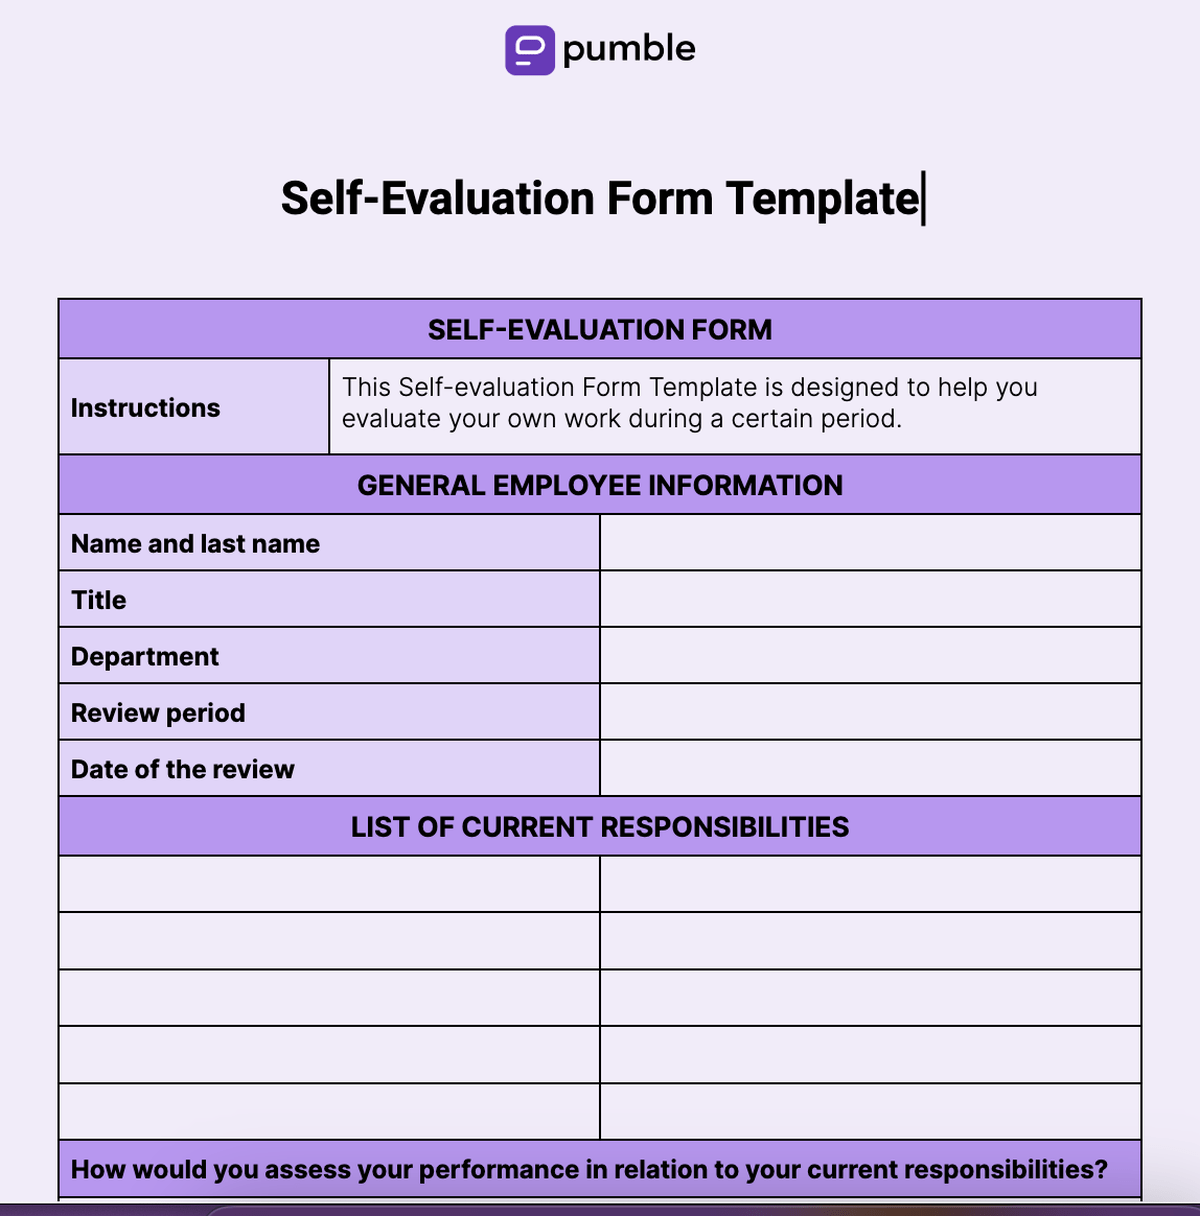 Self-Evaluation Form Template